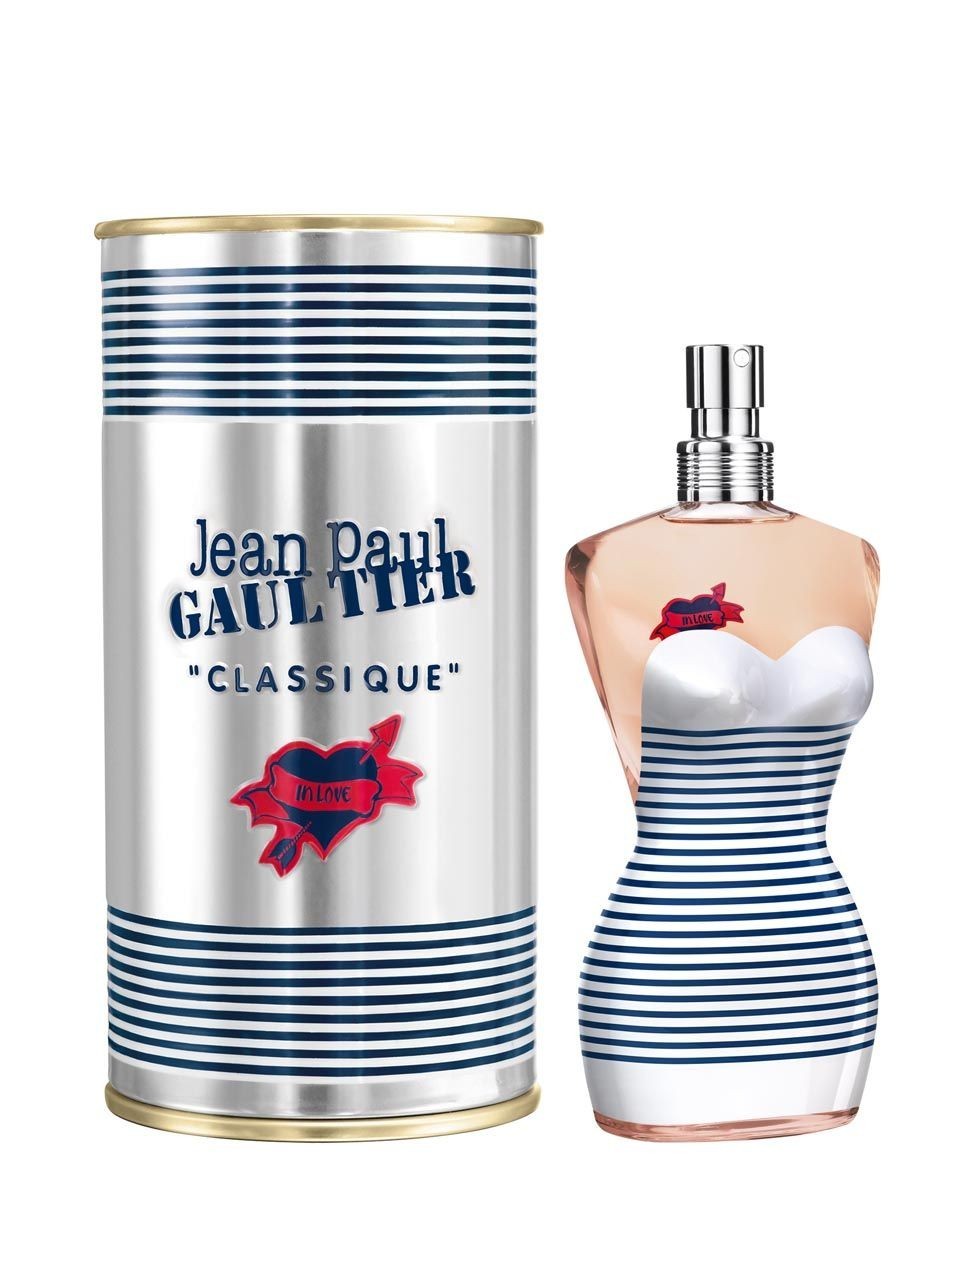 Jean paul gaultier ароматы. Jean Paul Gaultier туалетная вода. Jean Paul Gaultier classique 100ml EDT.